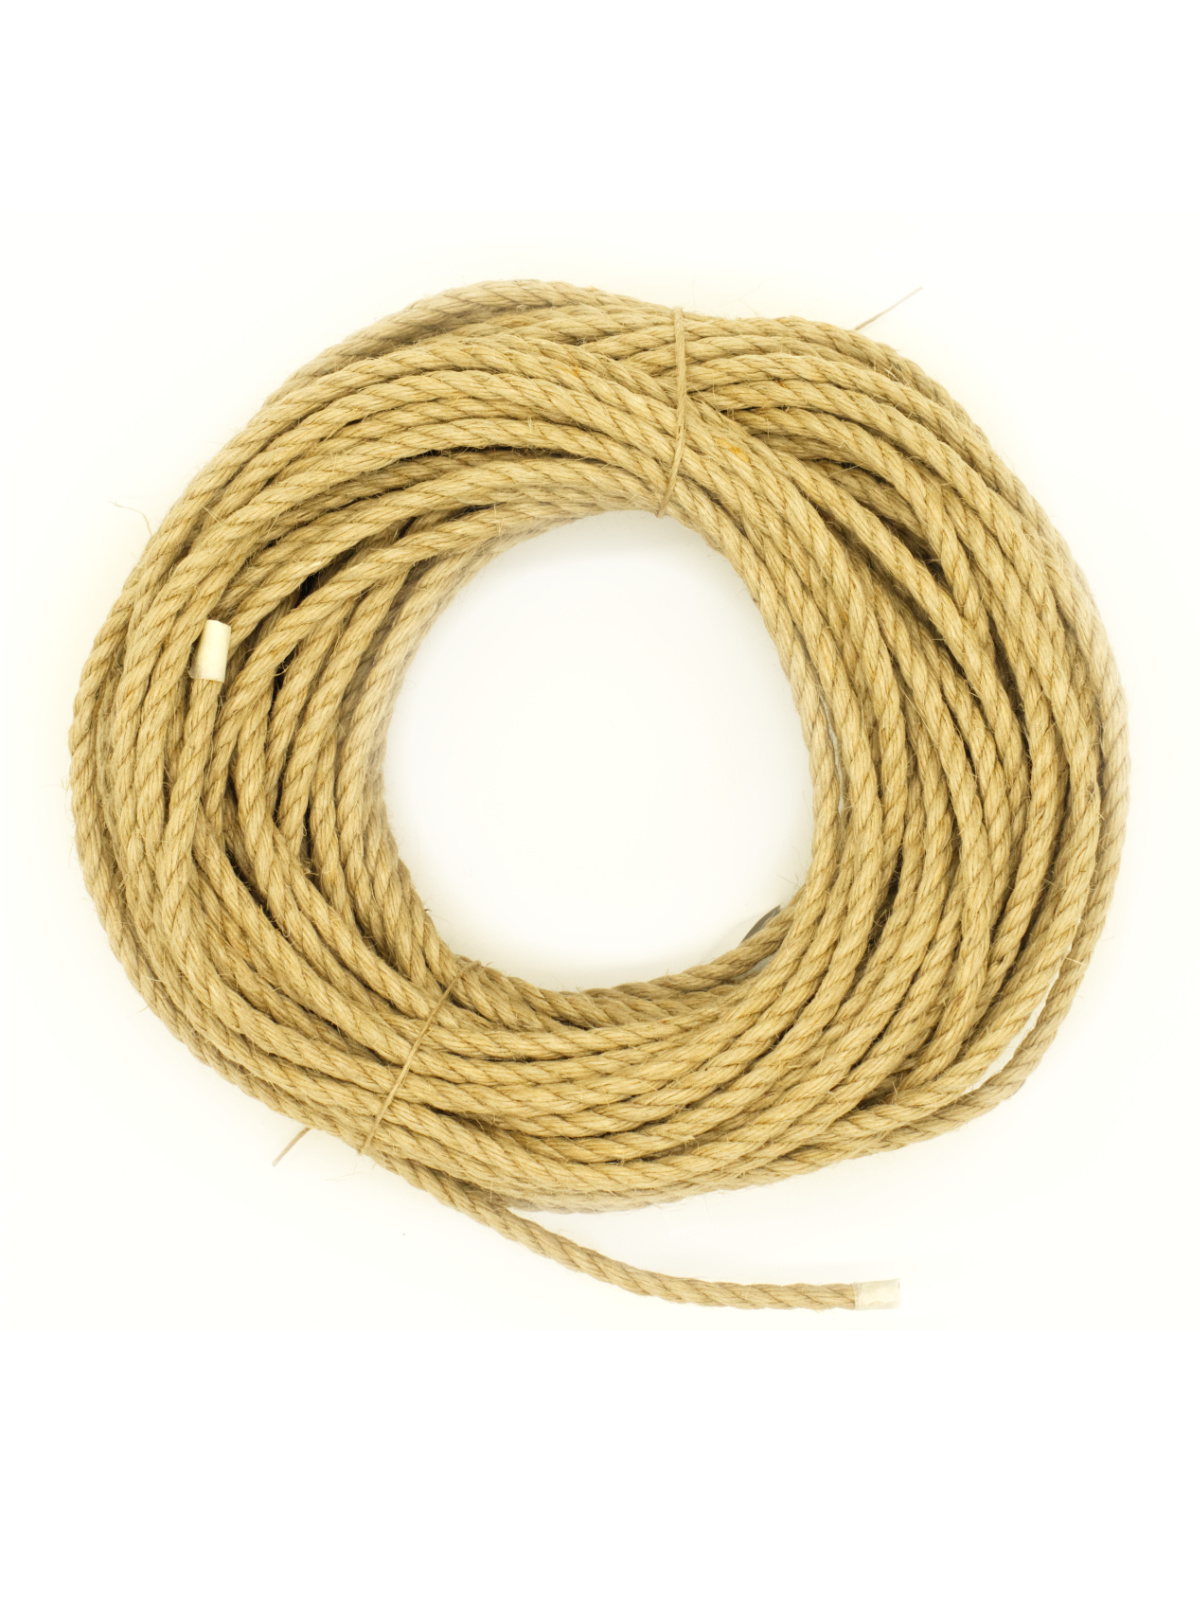 ∅ 5mm raw jute rope, AMATSUNAWA 27, JBO-free, for DIY processing